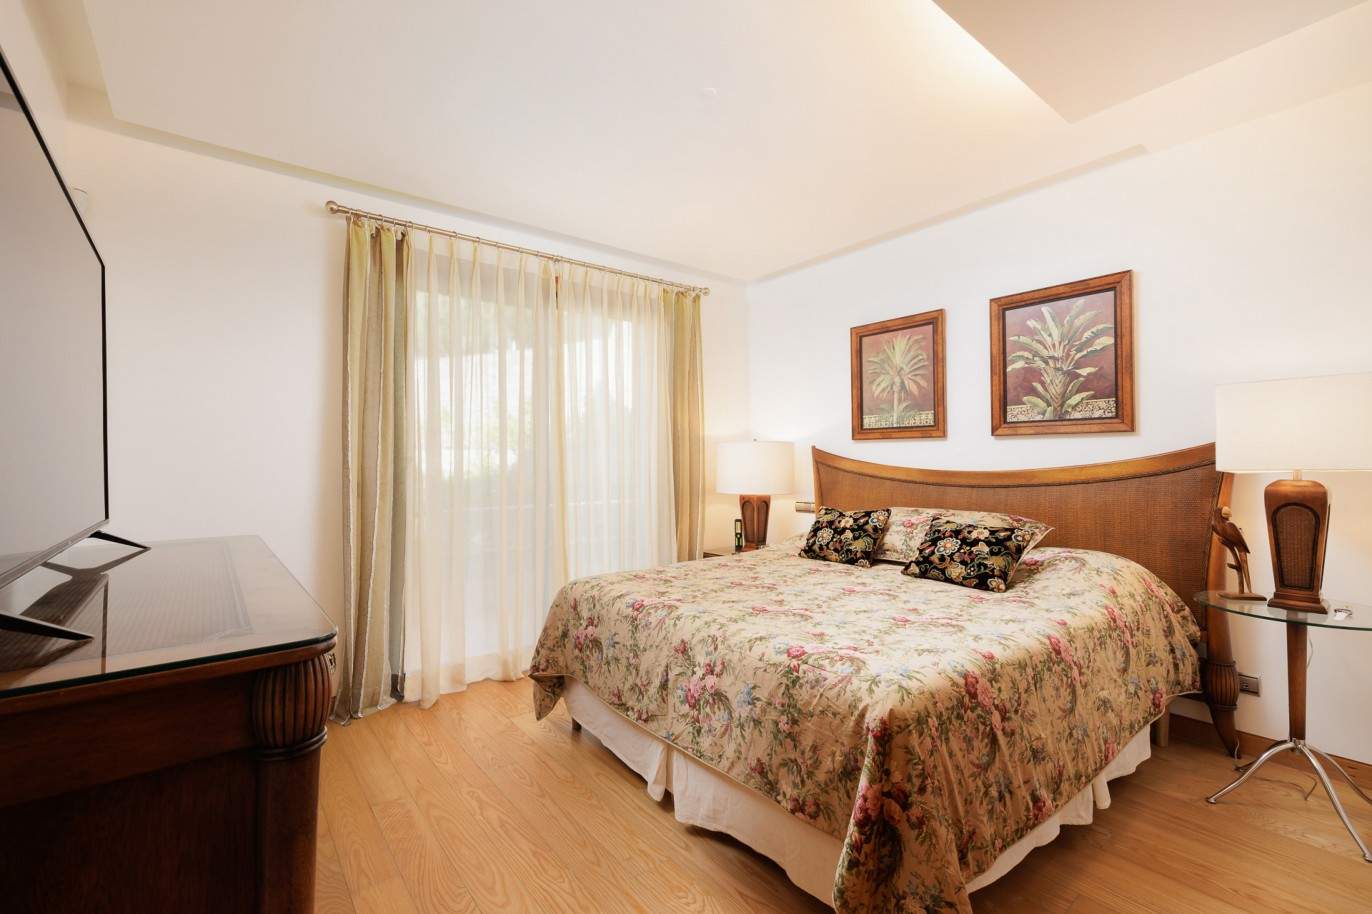 3 bedroom apartment with pool, for sale in Vale do Lobo, Algarve_207387